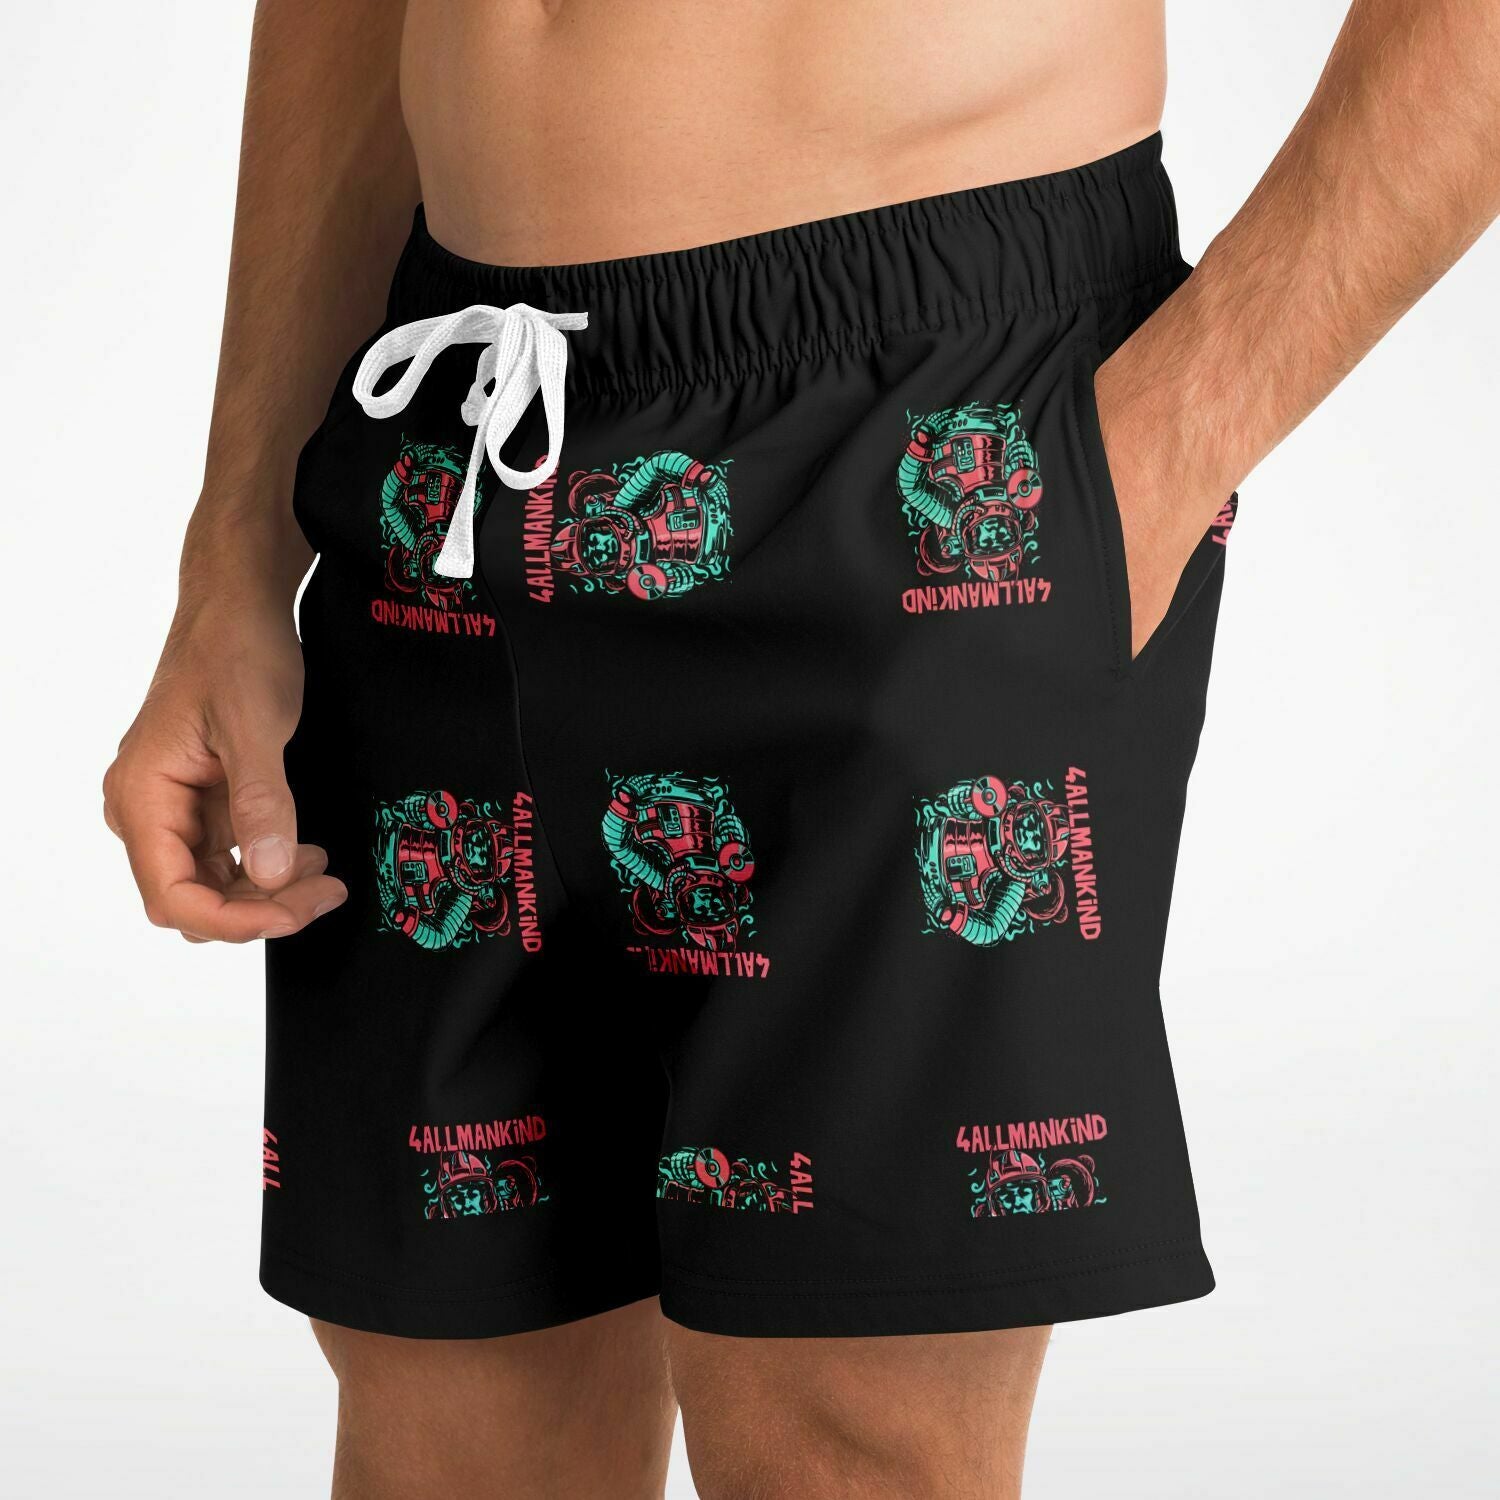 Premium Men's Wavy-Dukes Casual Traditional Shorts